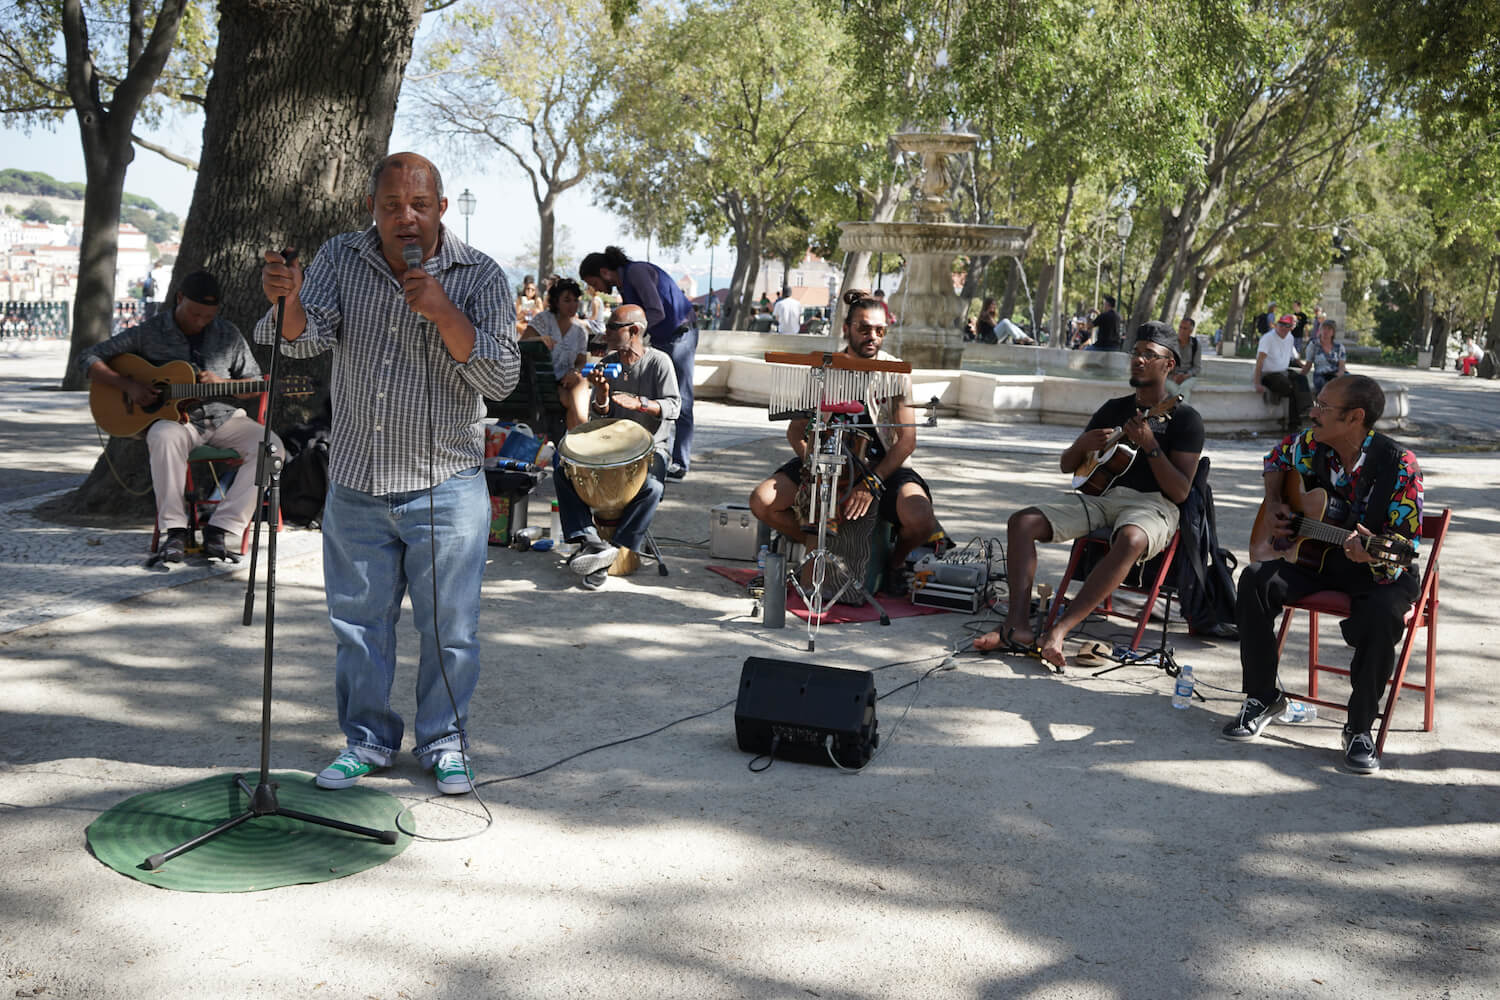 Street-musicians “Nova Afrika” from the Capo Verde Islands